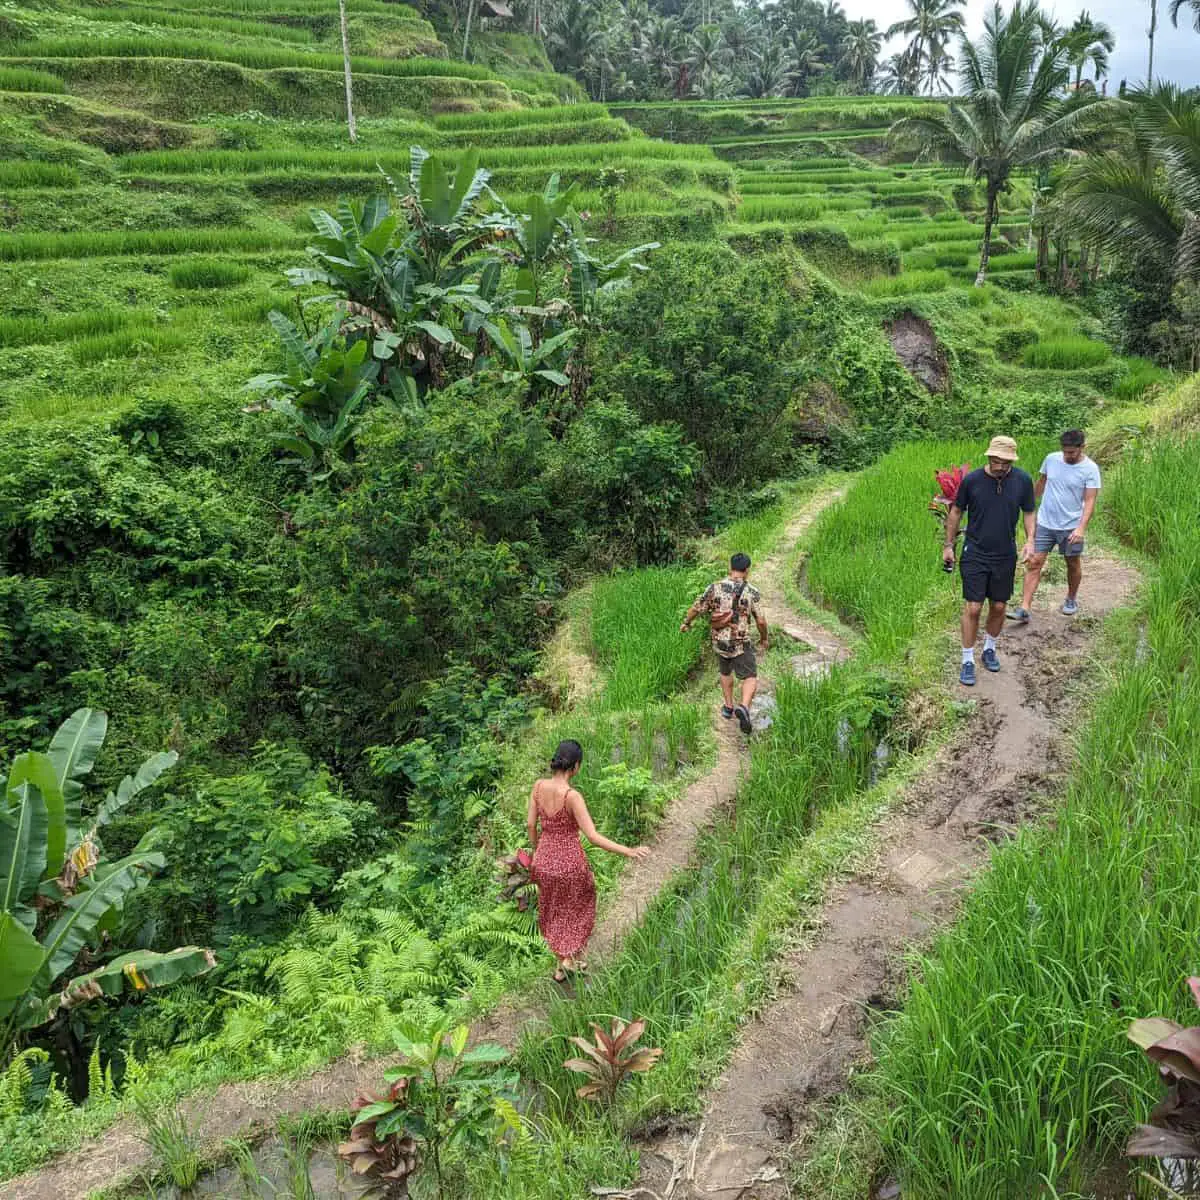 Strolling through the paddy fields of Ubud Bali